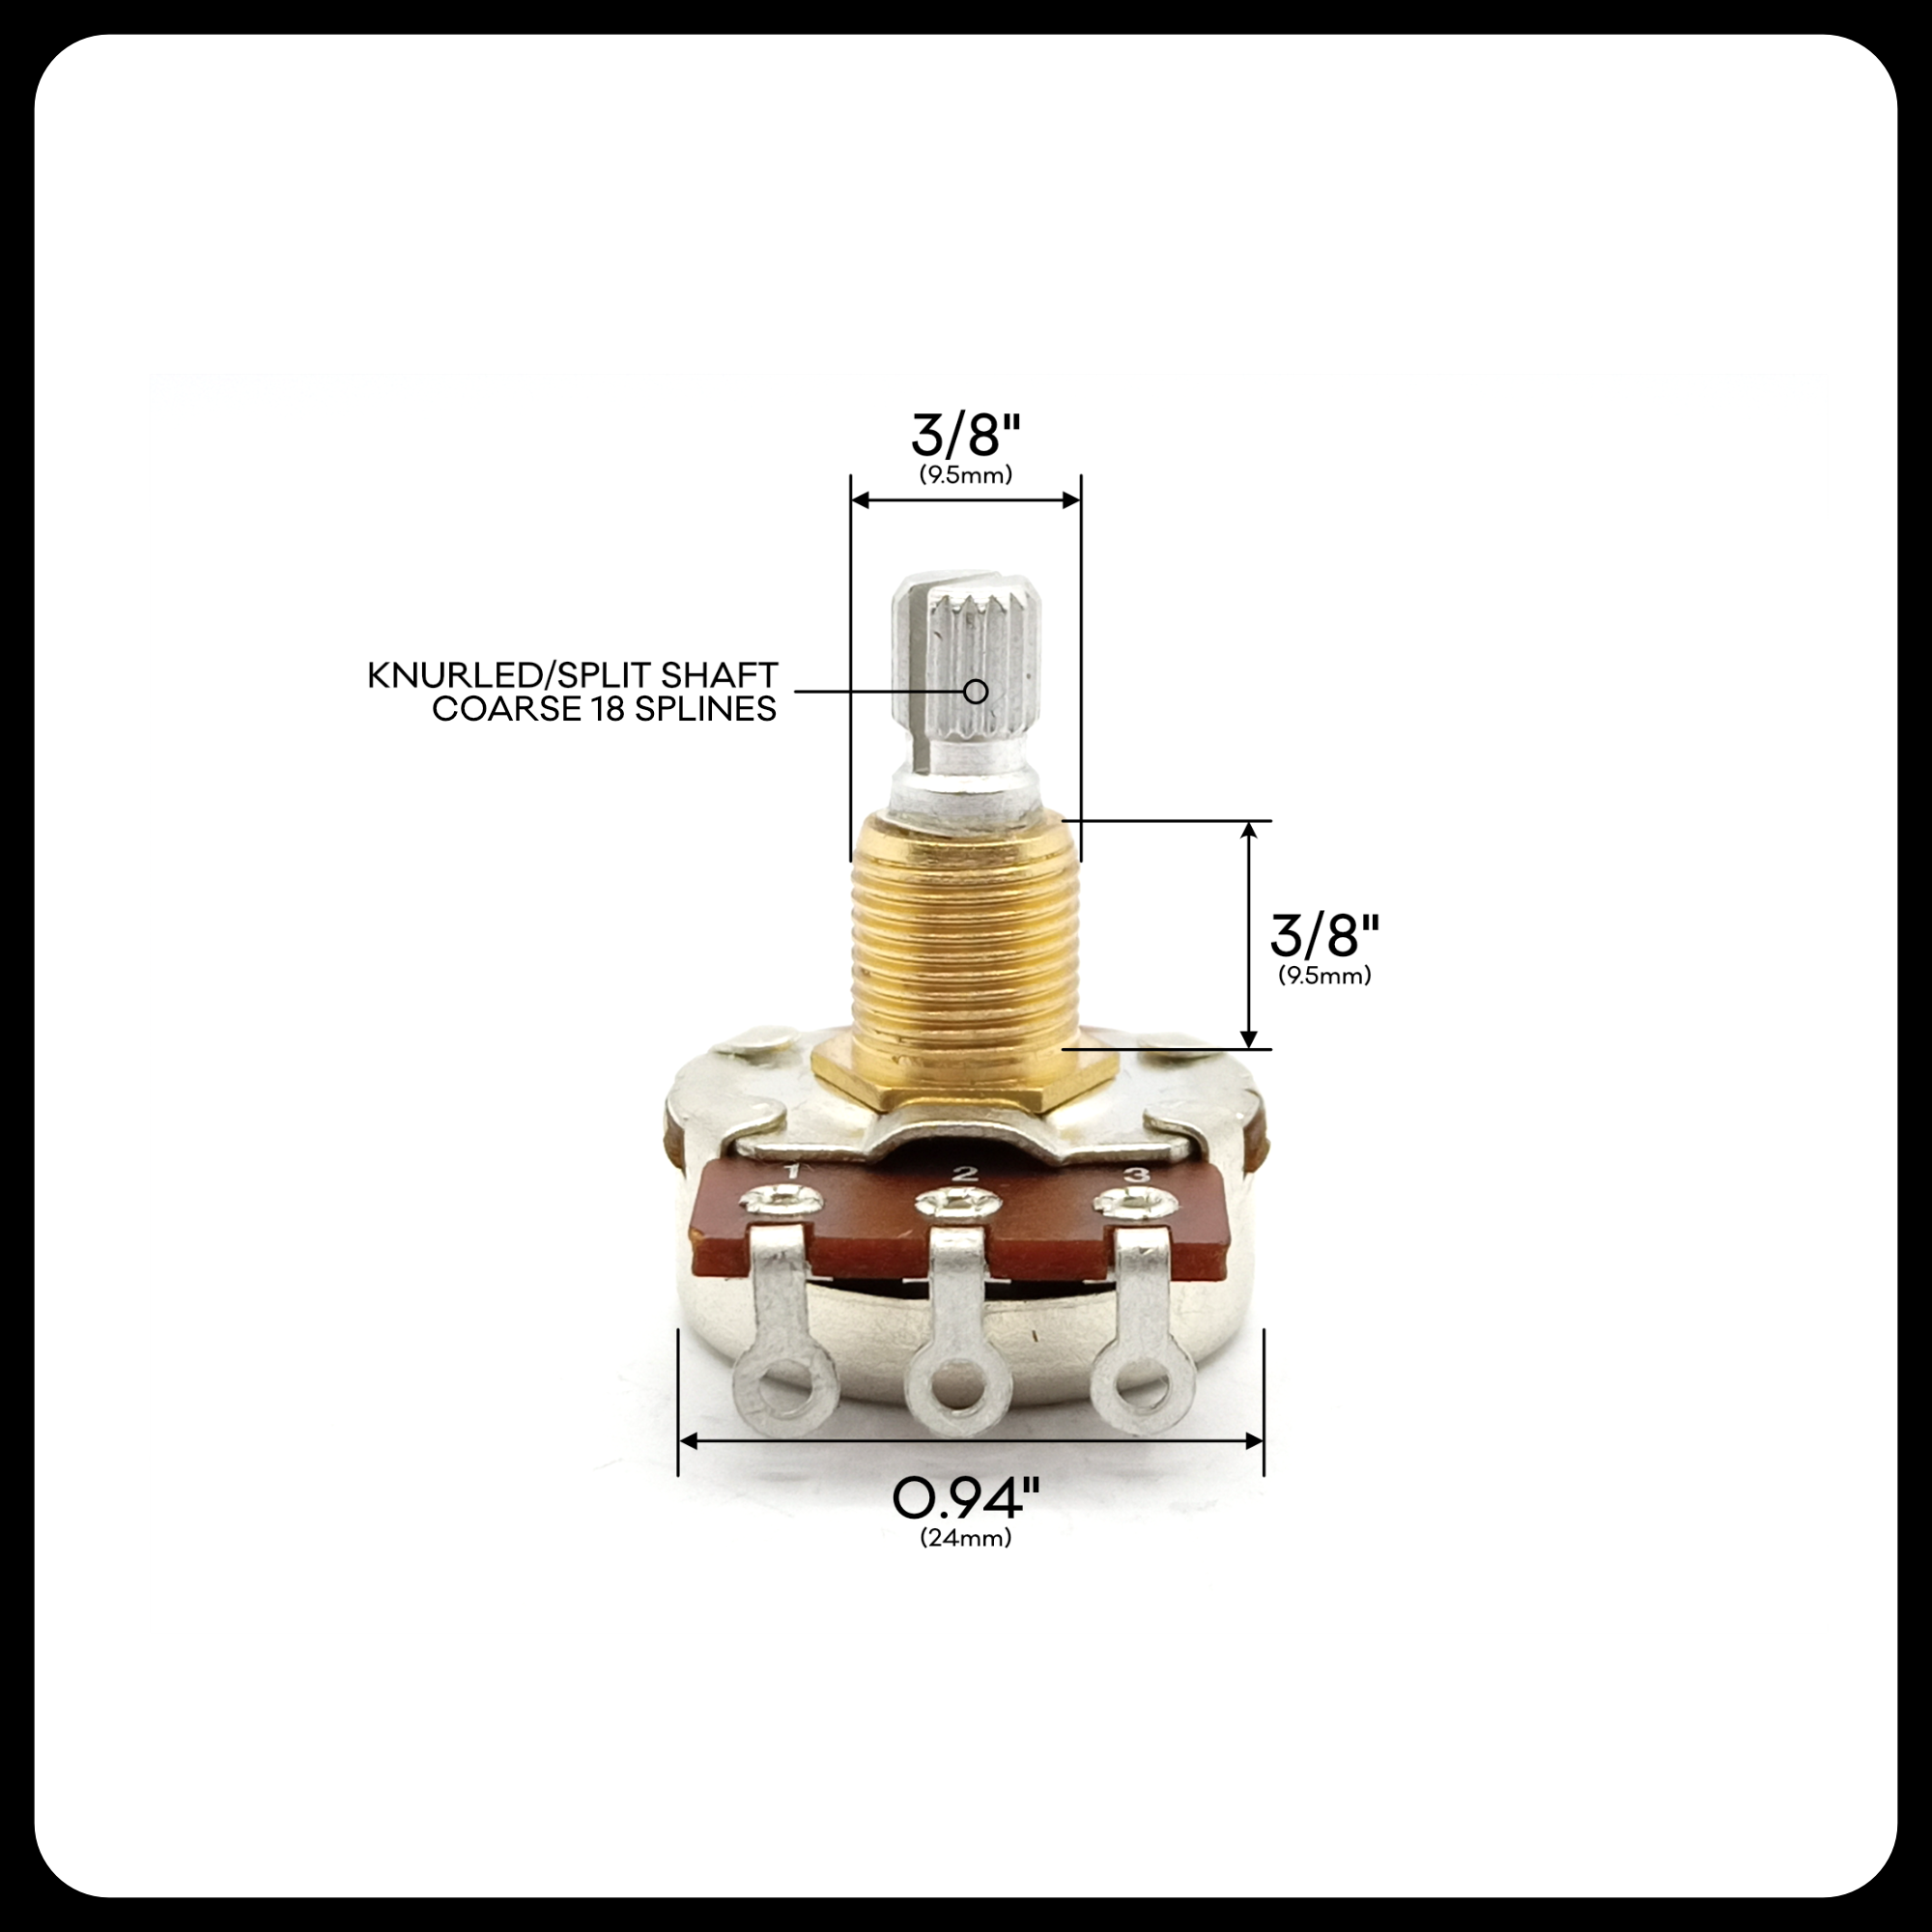 Bourns® Premium US ⅜” Standard Length Full-Size Potentiometer (High Torque, Split Shaft)